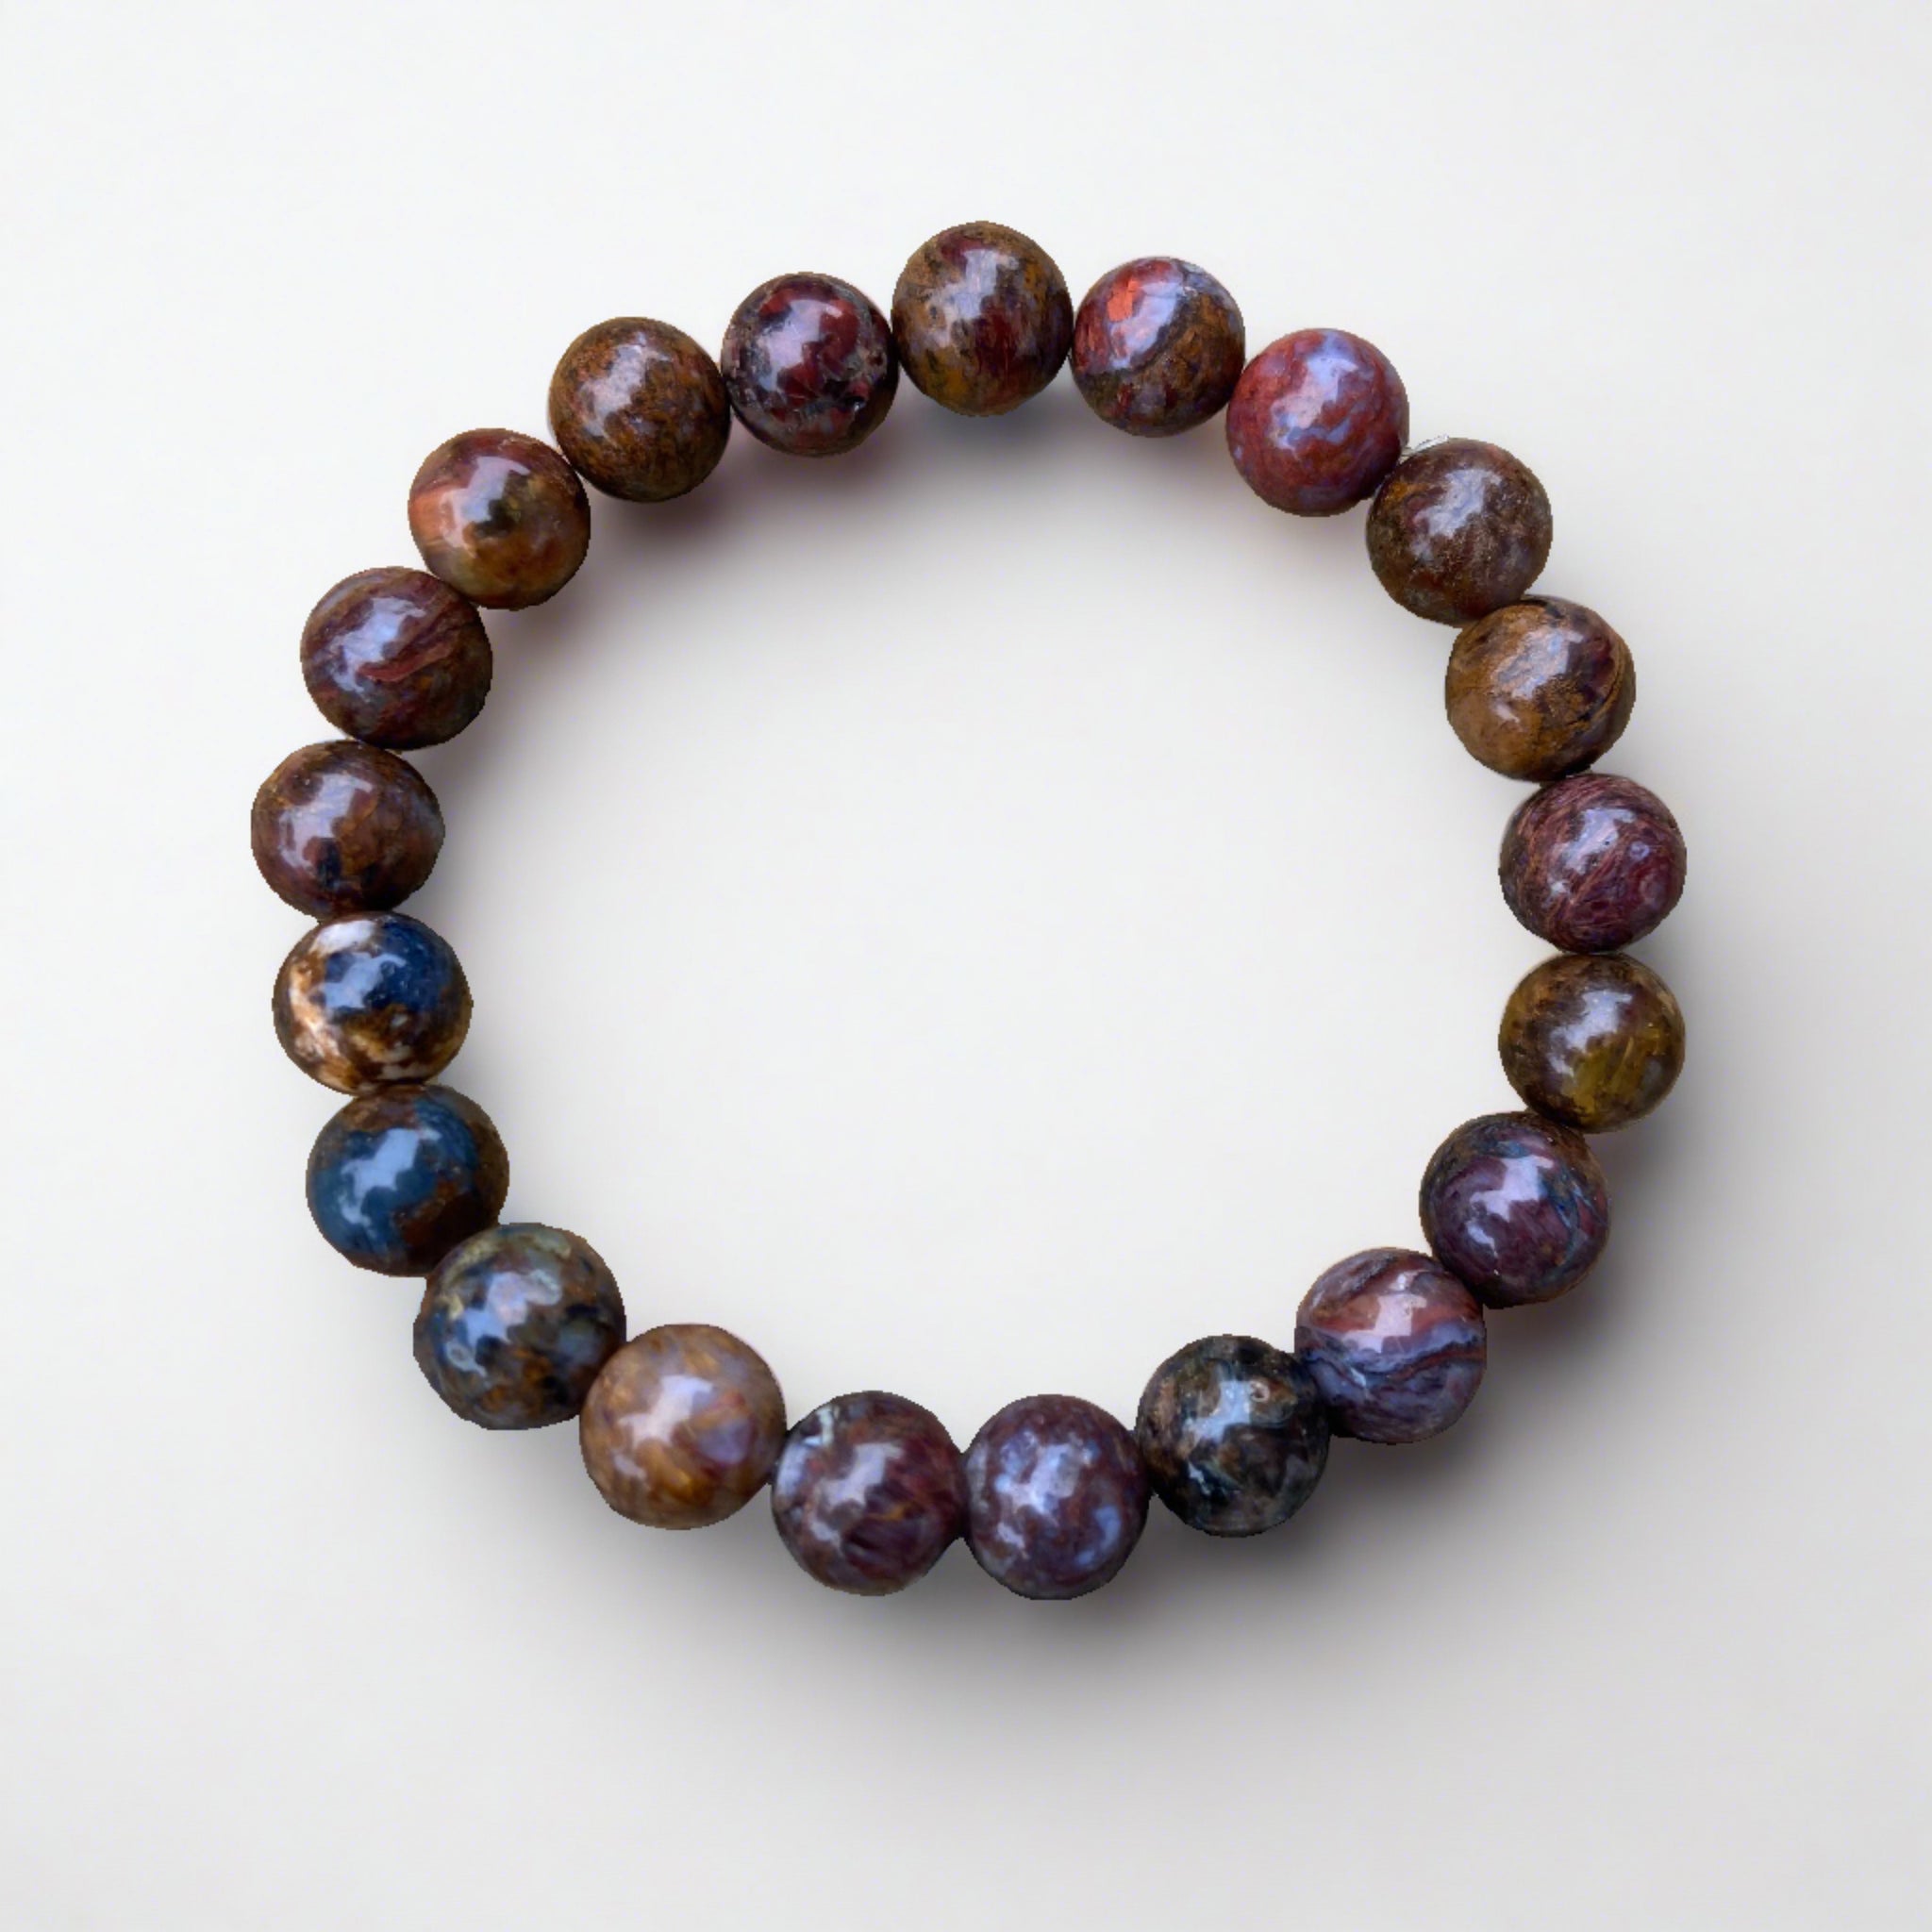 Pietersite Enlightenment & Spirituality Bracelet representing mindfulness jewelry